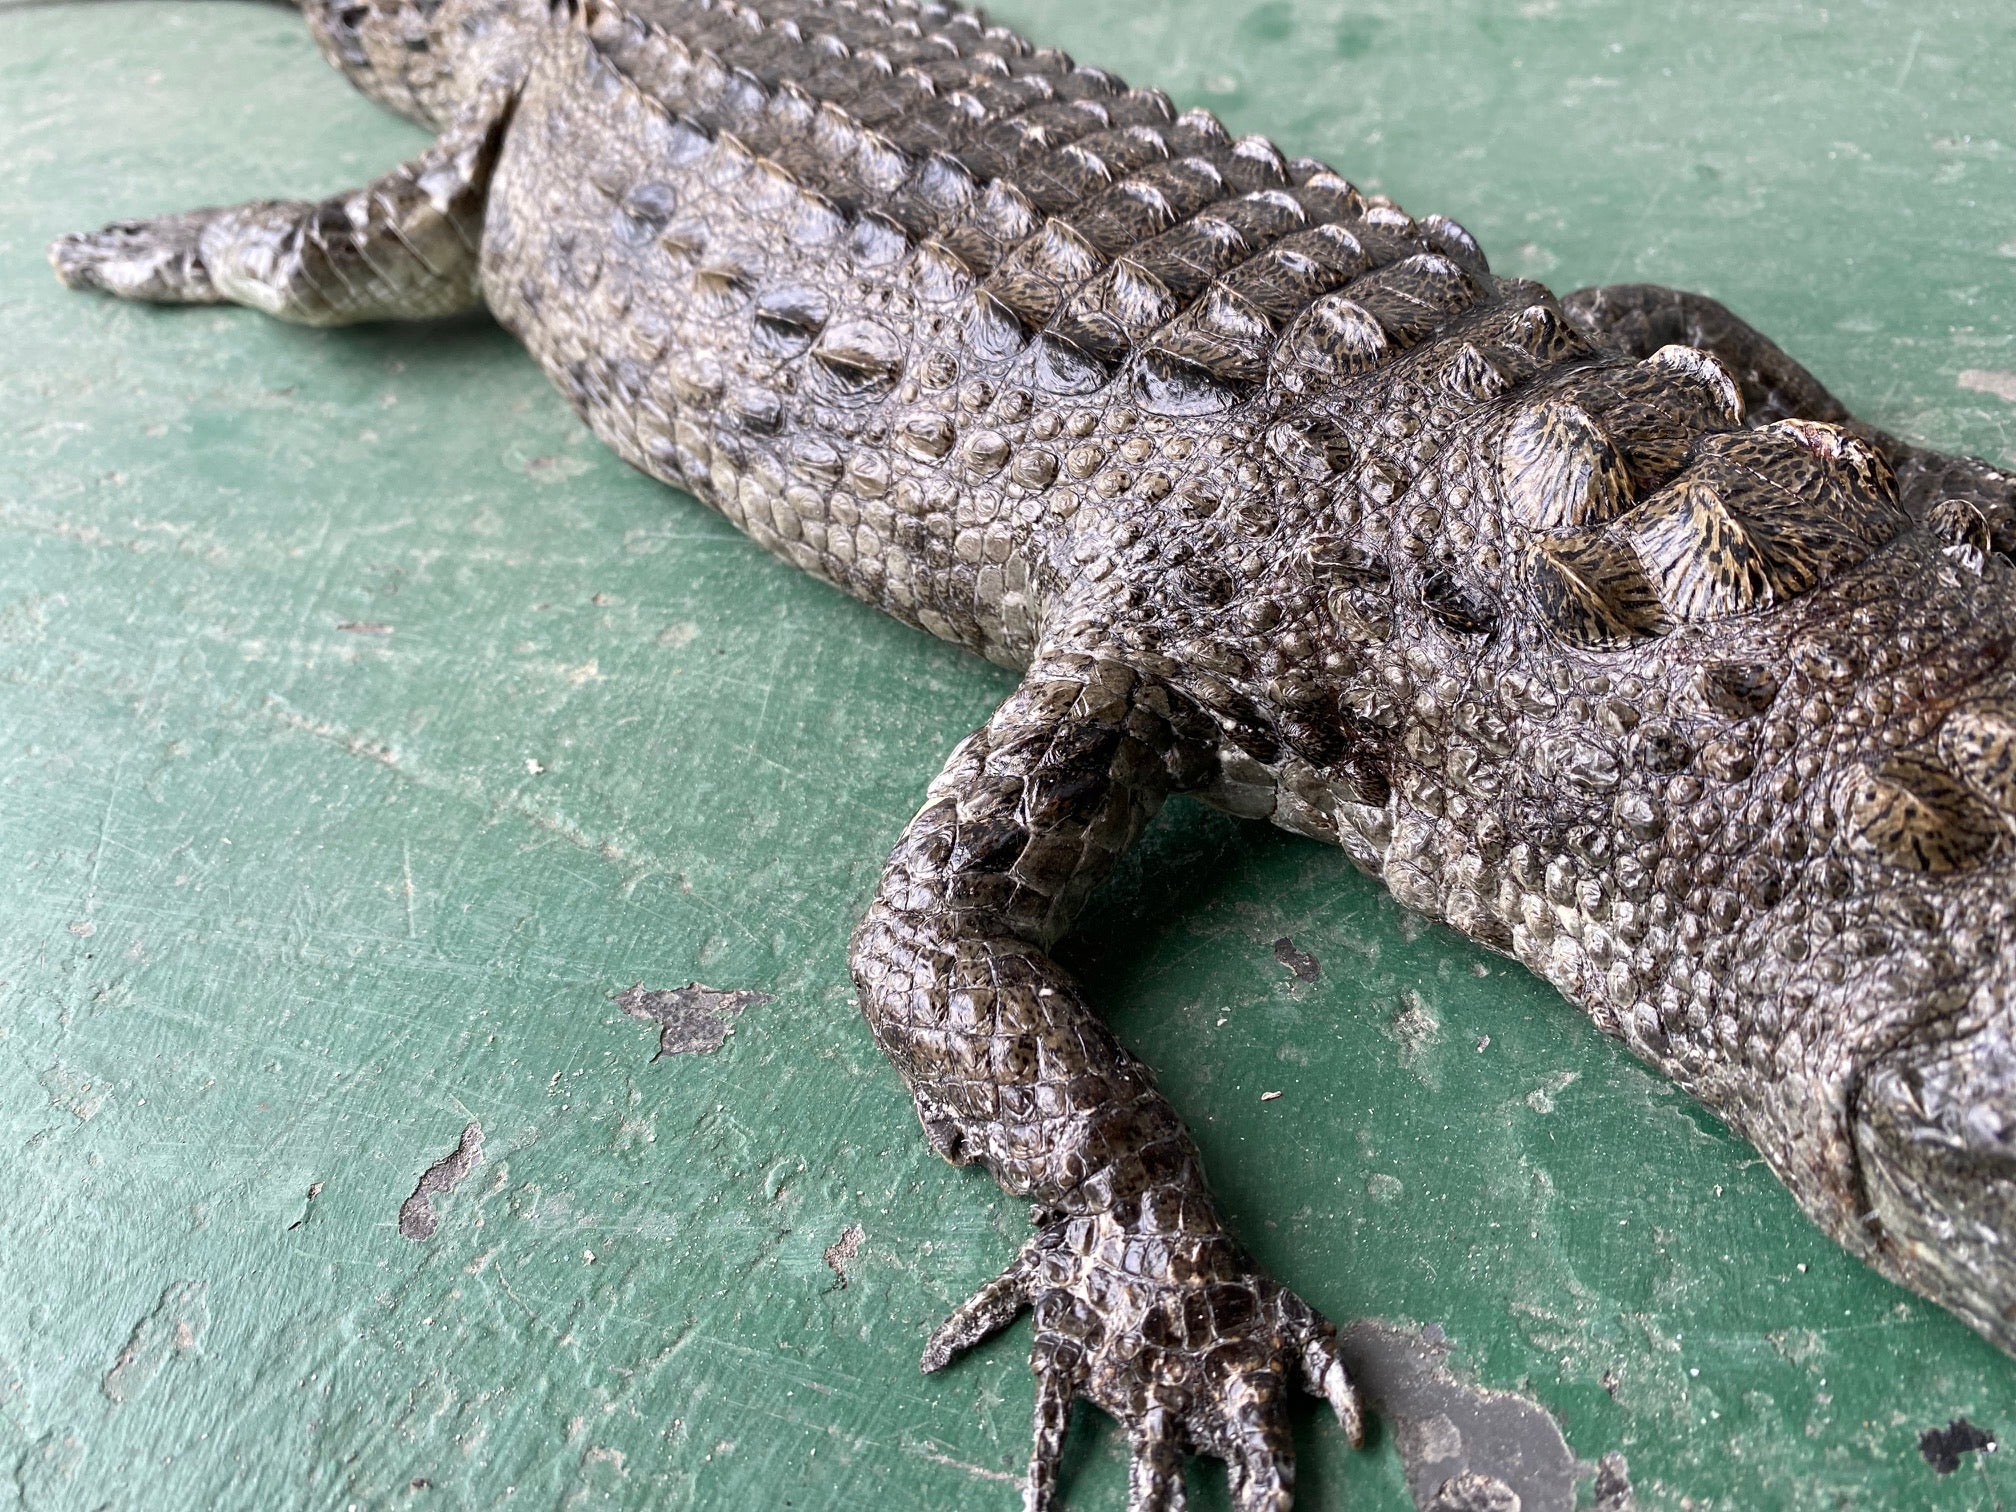 Nile Crocodile full mount